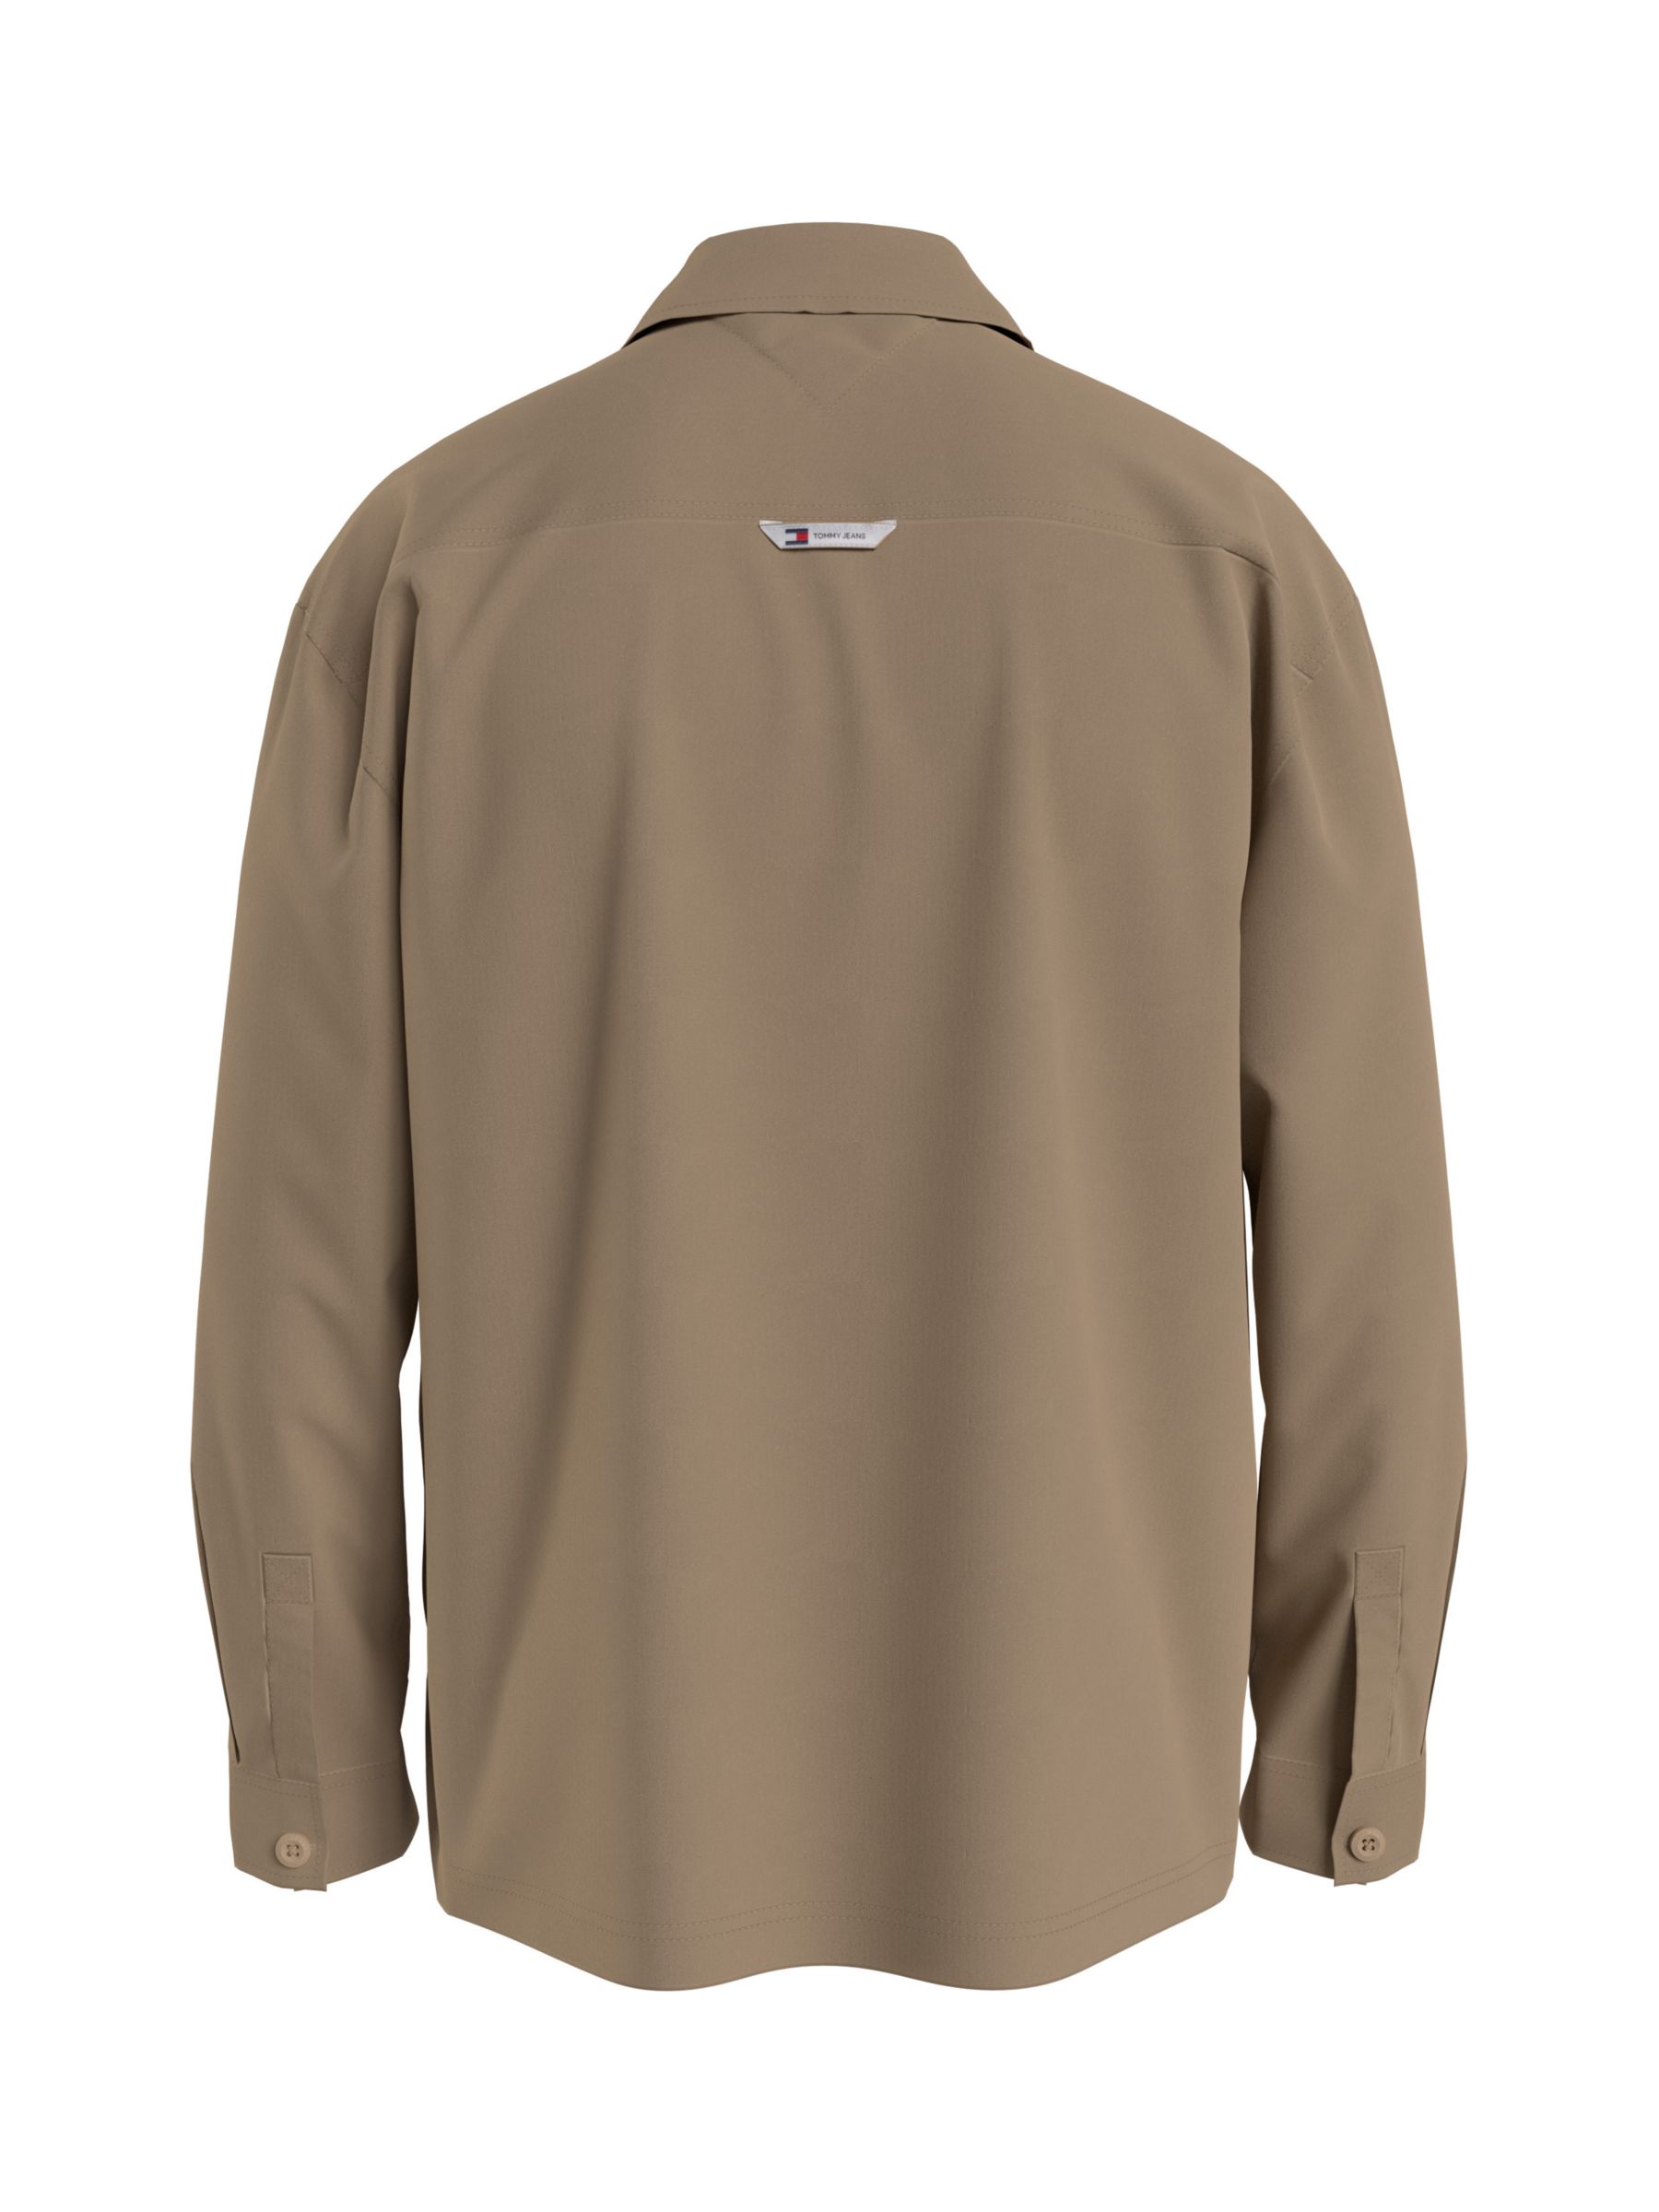 Buy Tommy Hilfiger Solid Overshirt, Tawny Sand Online at johnlewis.com